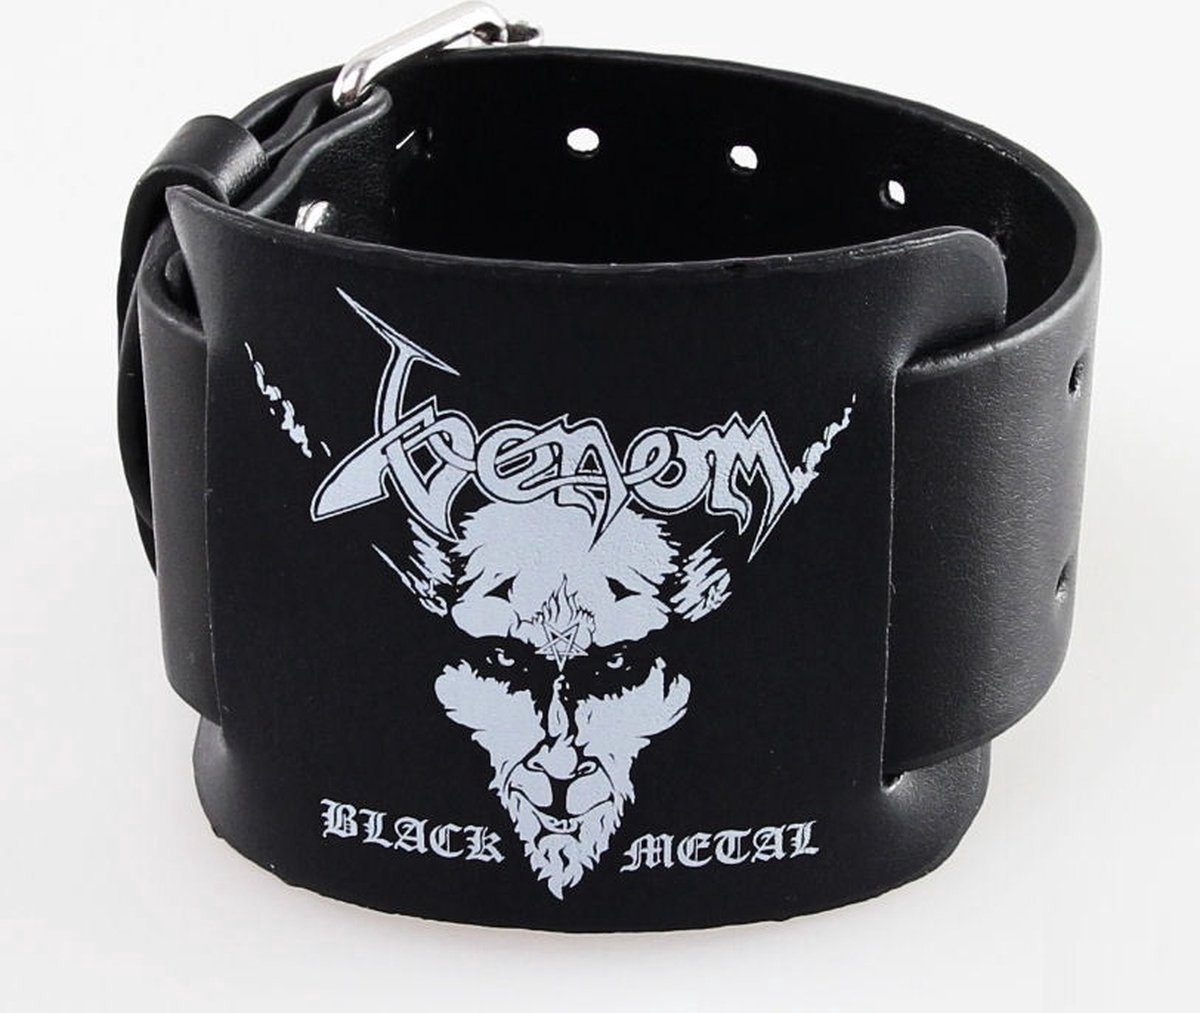 Venom - Black Metal - Leren Polsband